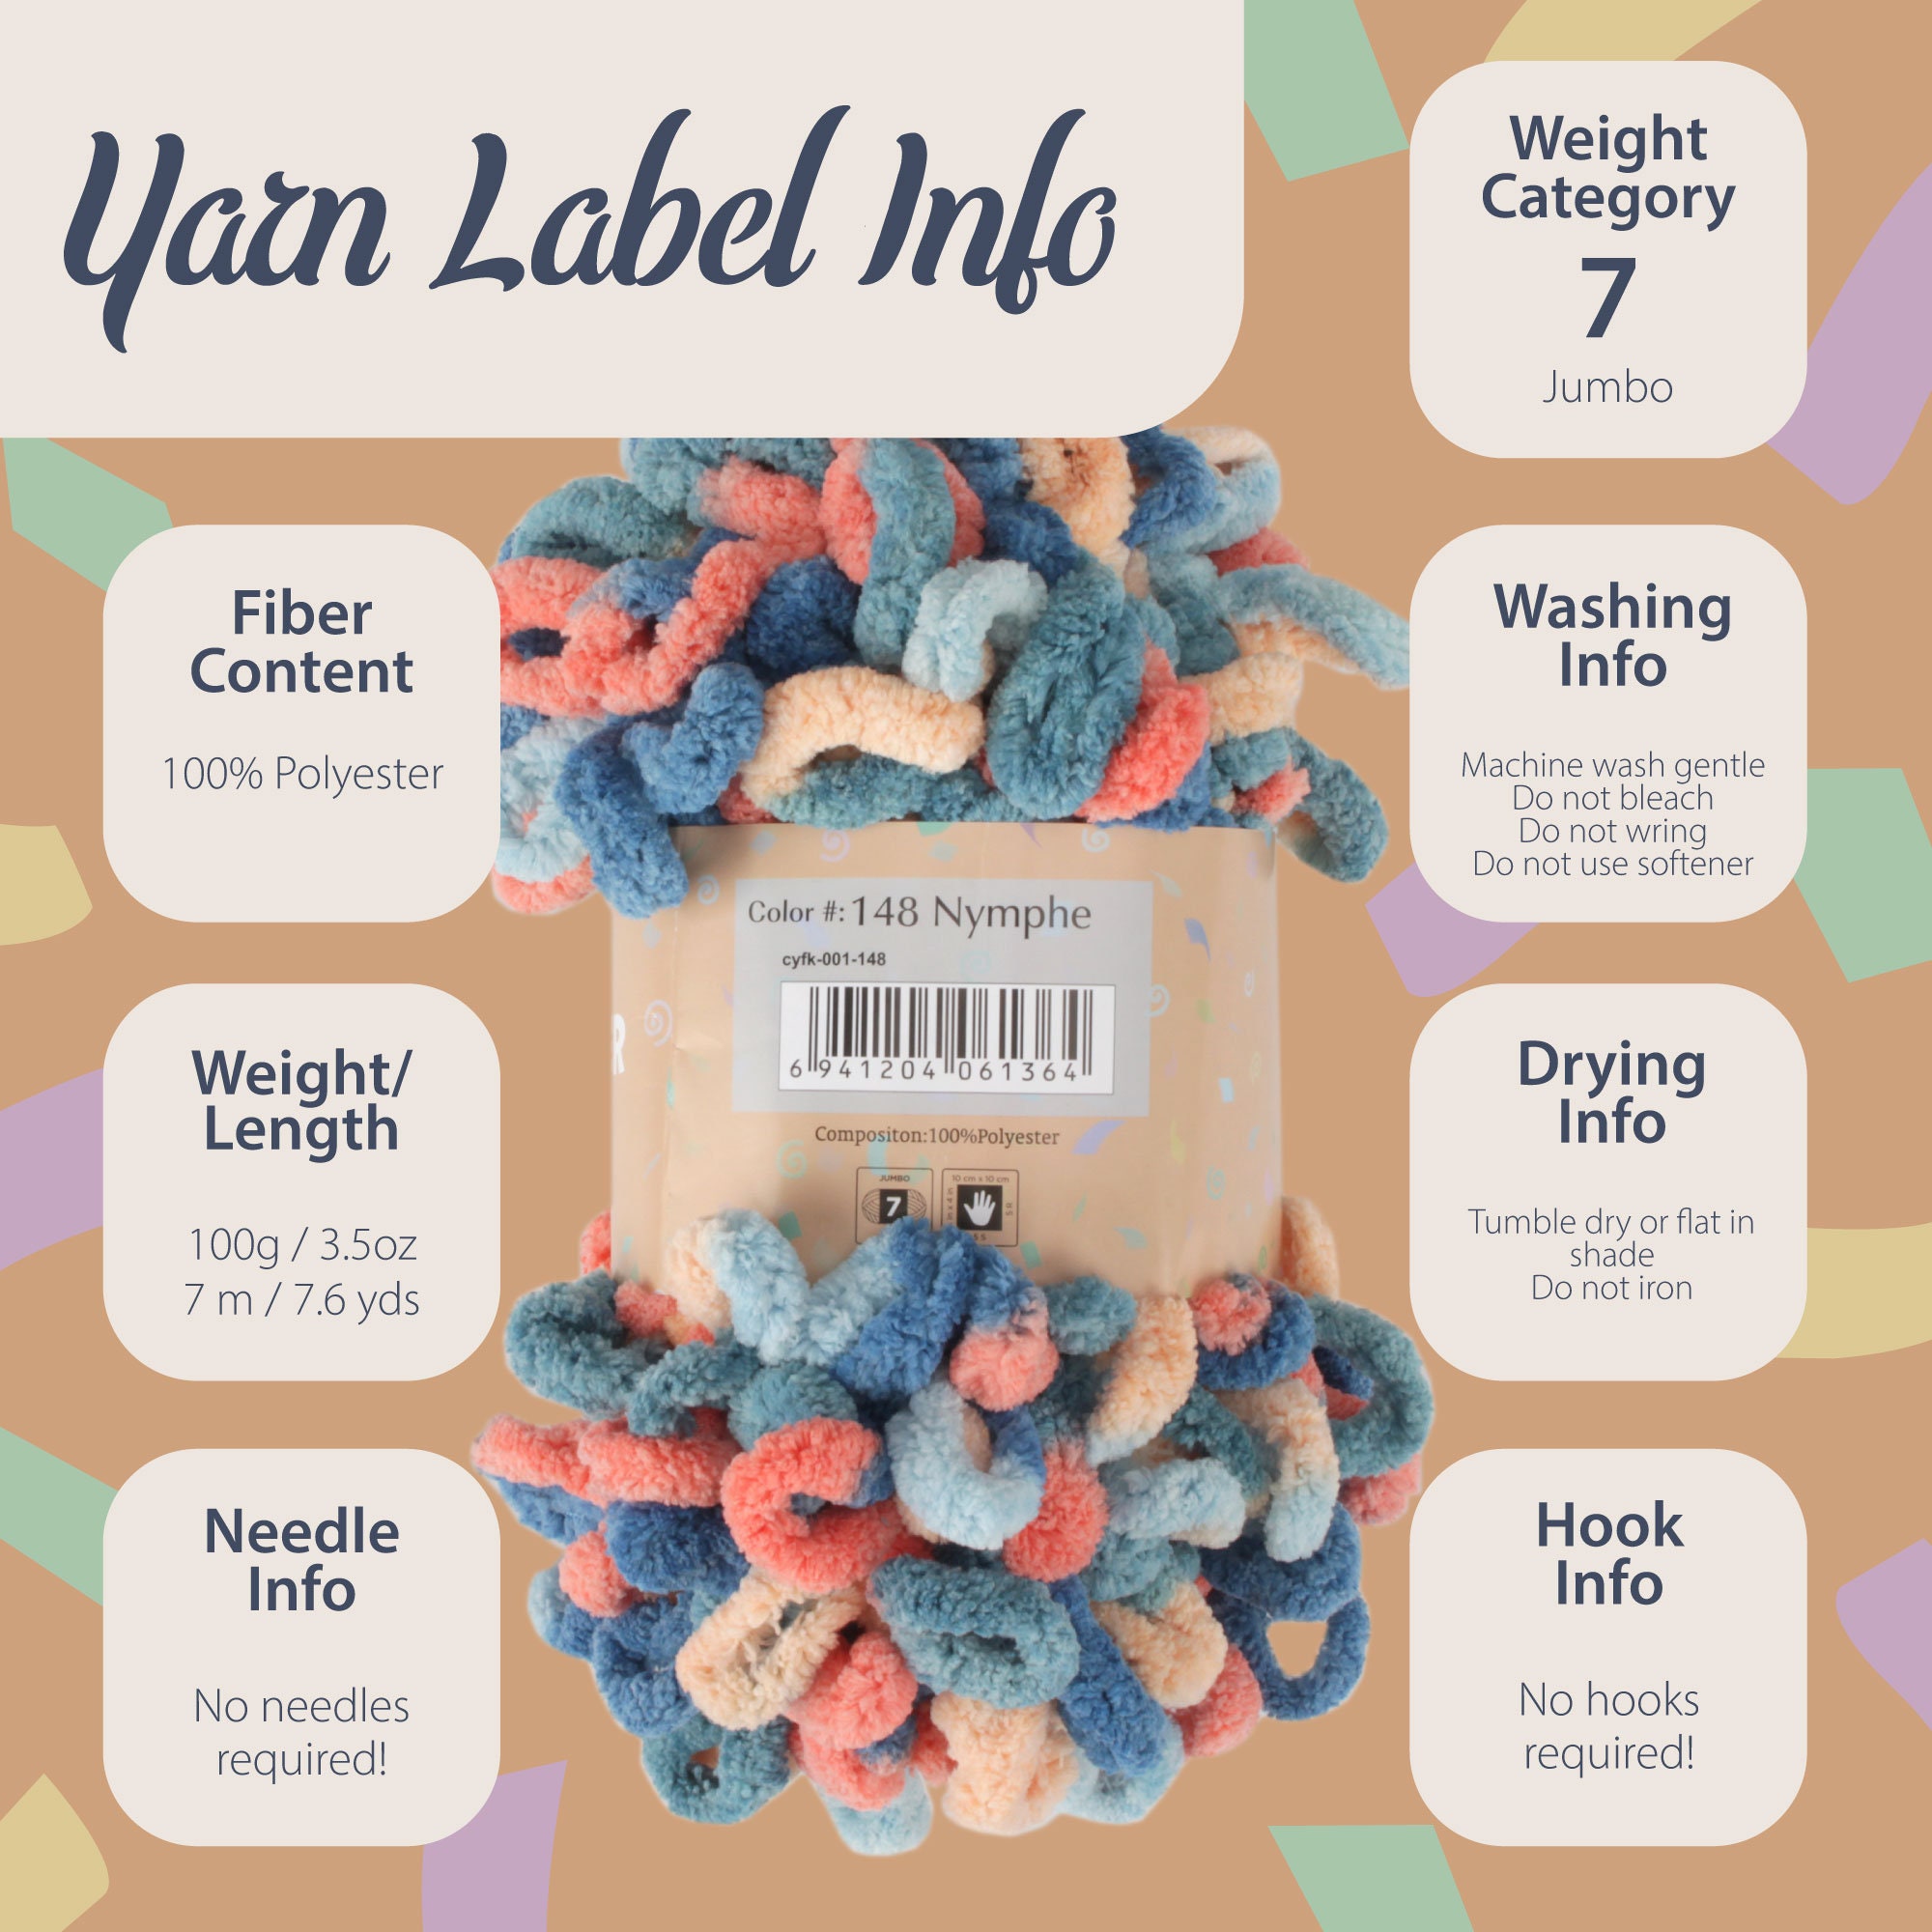 BambooMN Finger Knitting Yarn - Fun Finger Loops Yarn - 100% Polyester -  Ultra Violet - 2 Skeins